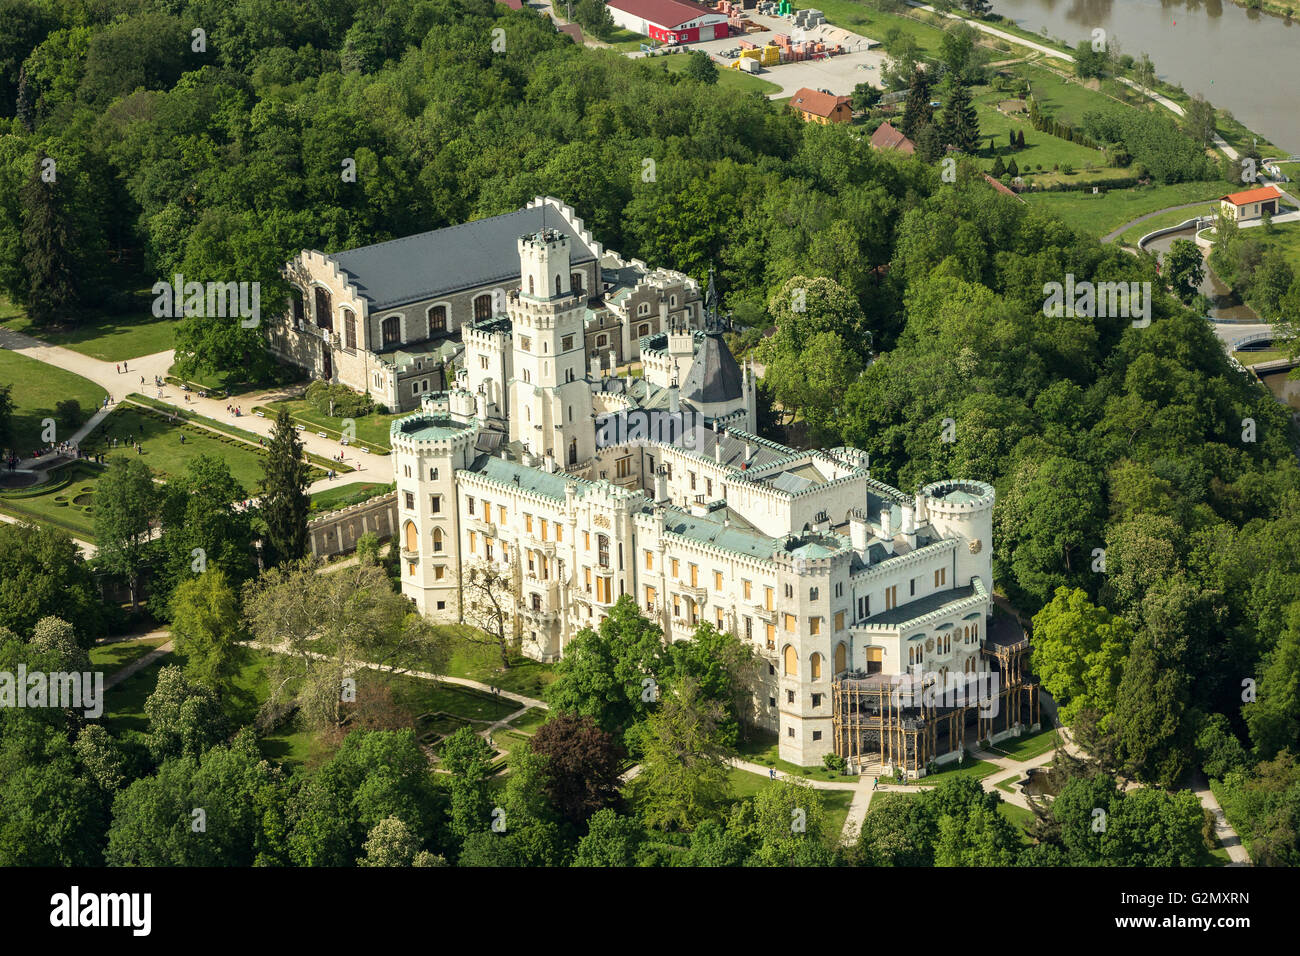 Aerial view of the Castle Hluboka, Hluboka nad Vltavou. Czech Republic Stock Photo